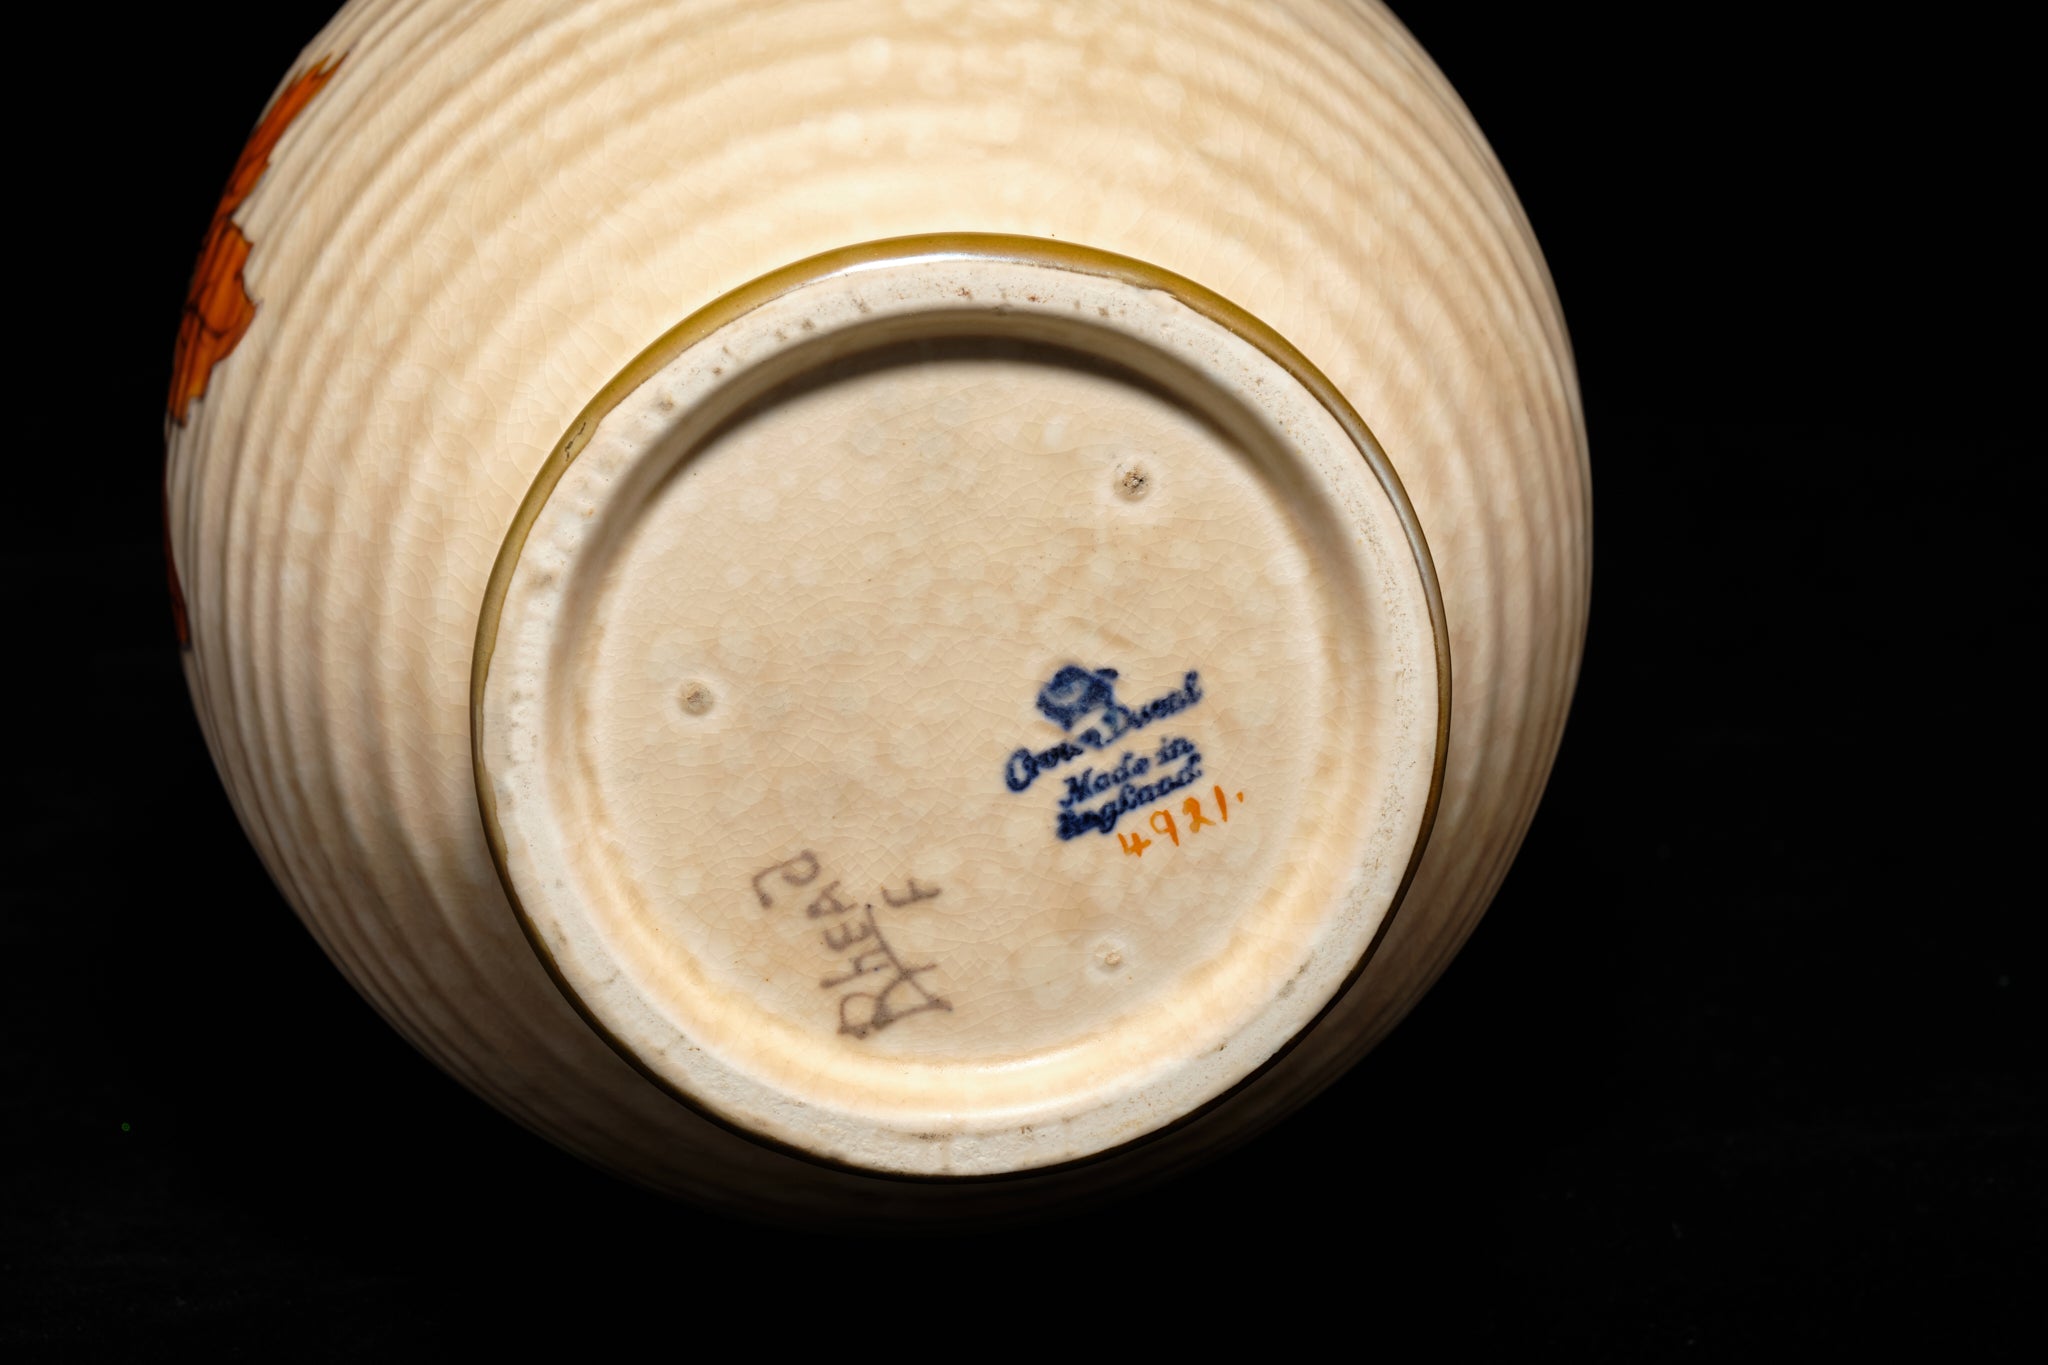 C1920 Frederick Rhead Tubelined pottery Vase.